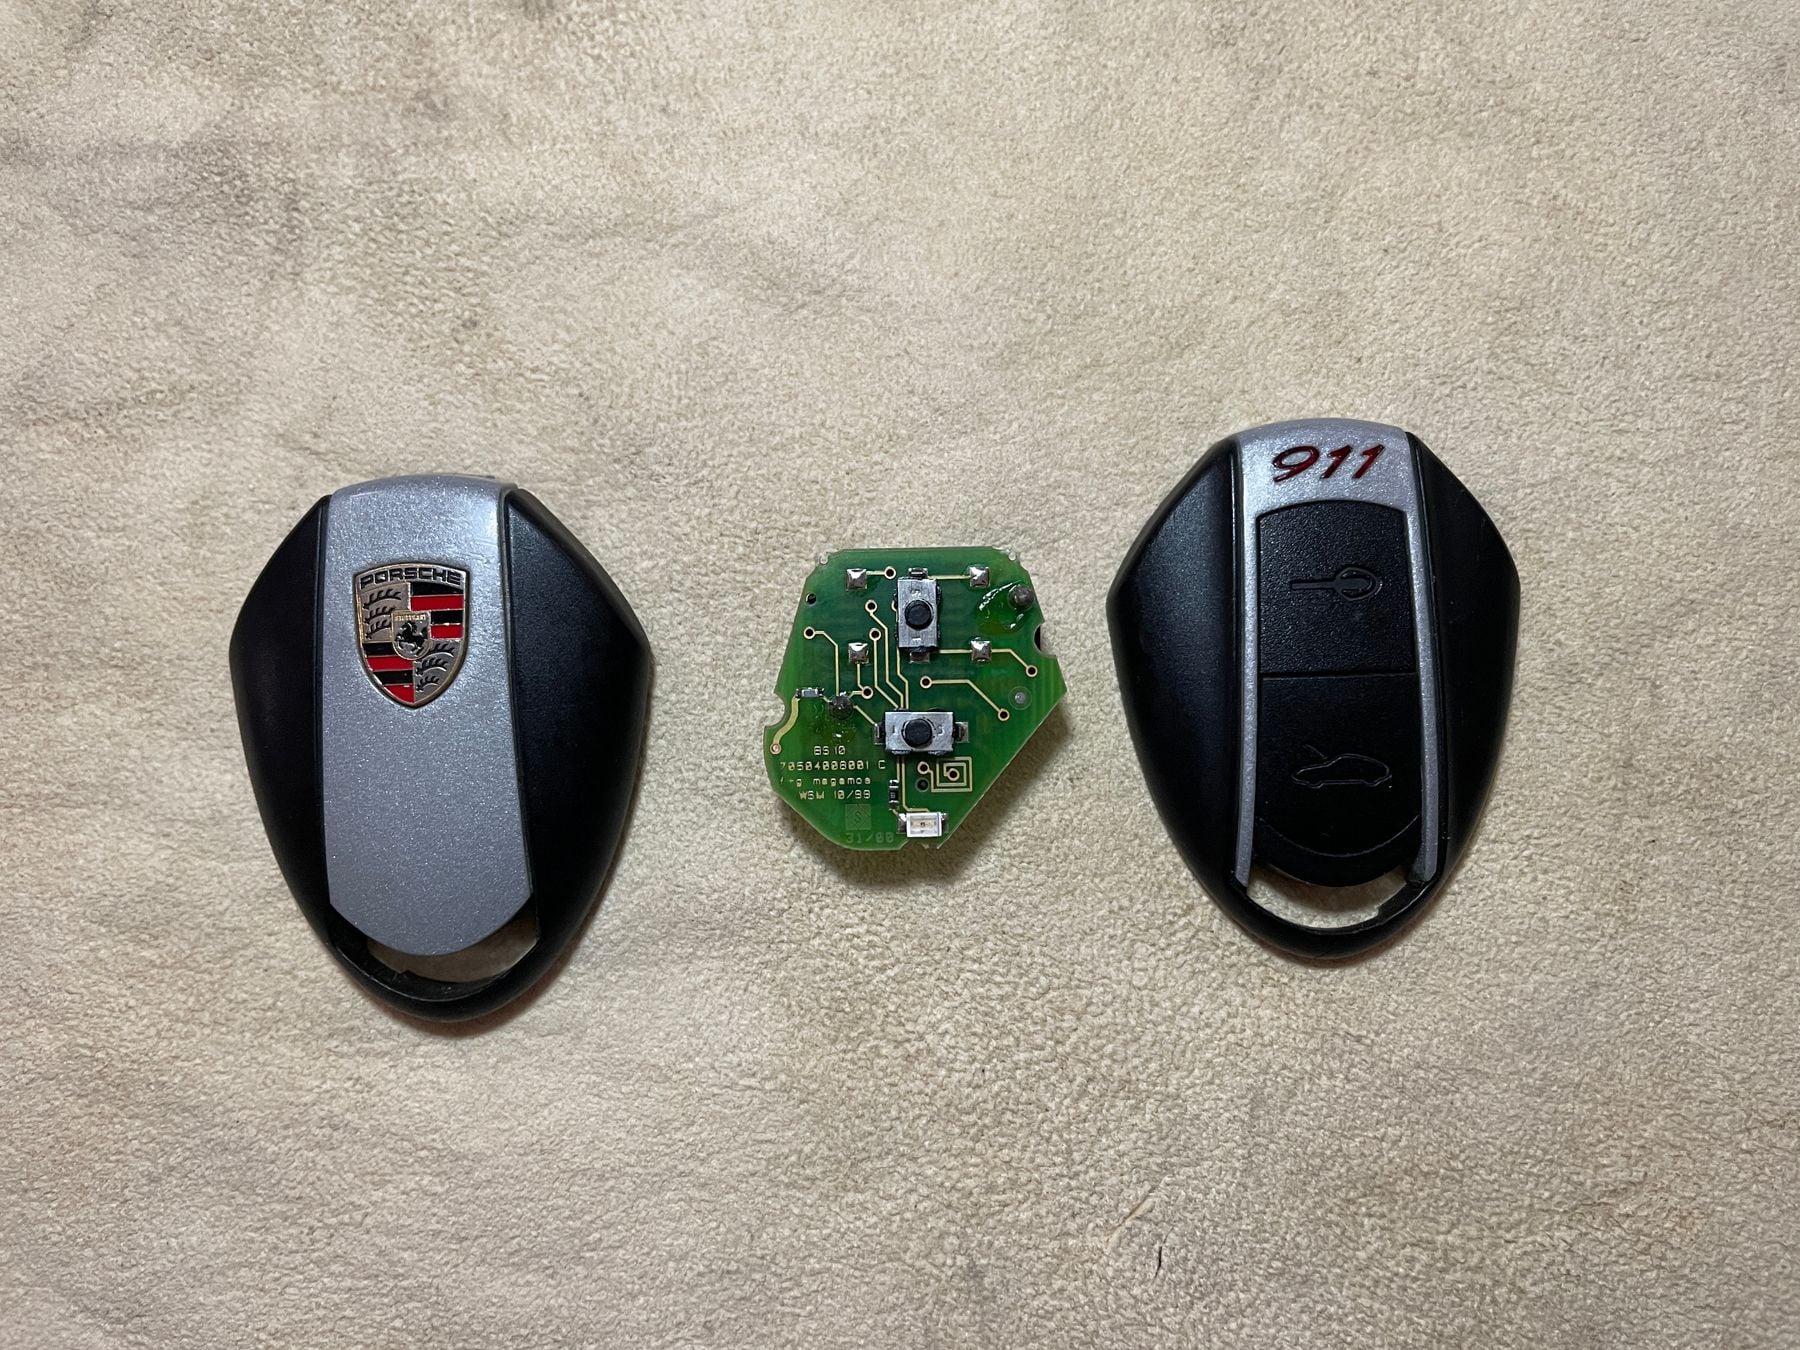 Accessories - Porsche Key Fobs: 911 Design Key Head, OEM Black/Monochrome Key Head - Used - 1999 to 2005 Porsche 911 - Queens, NY 11375, United States